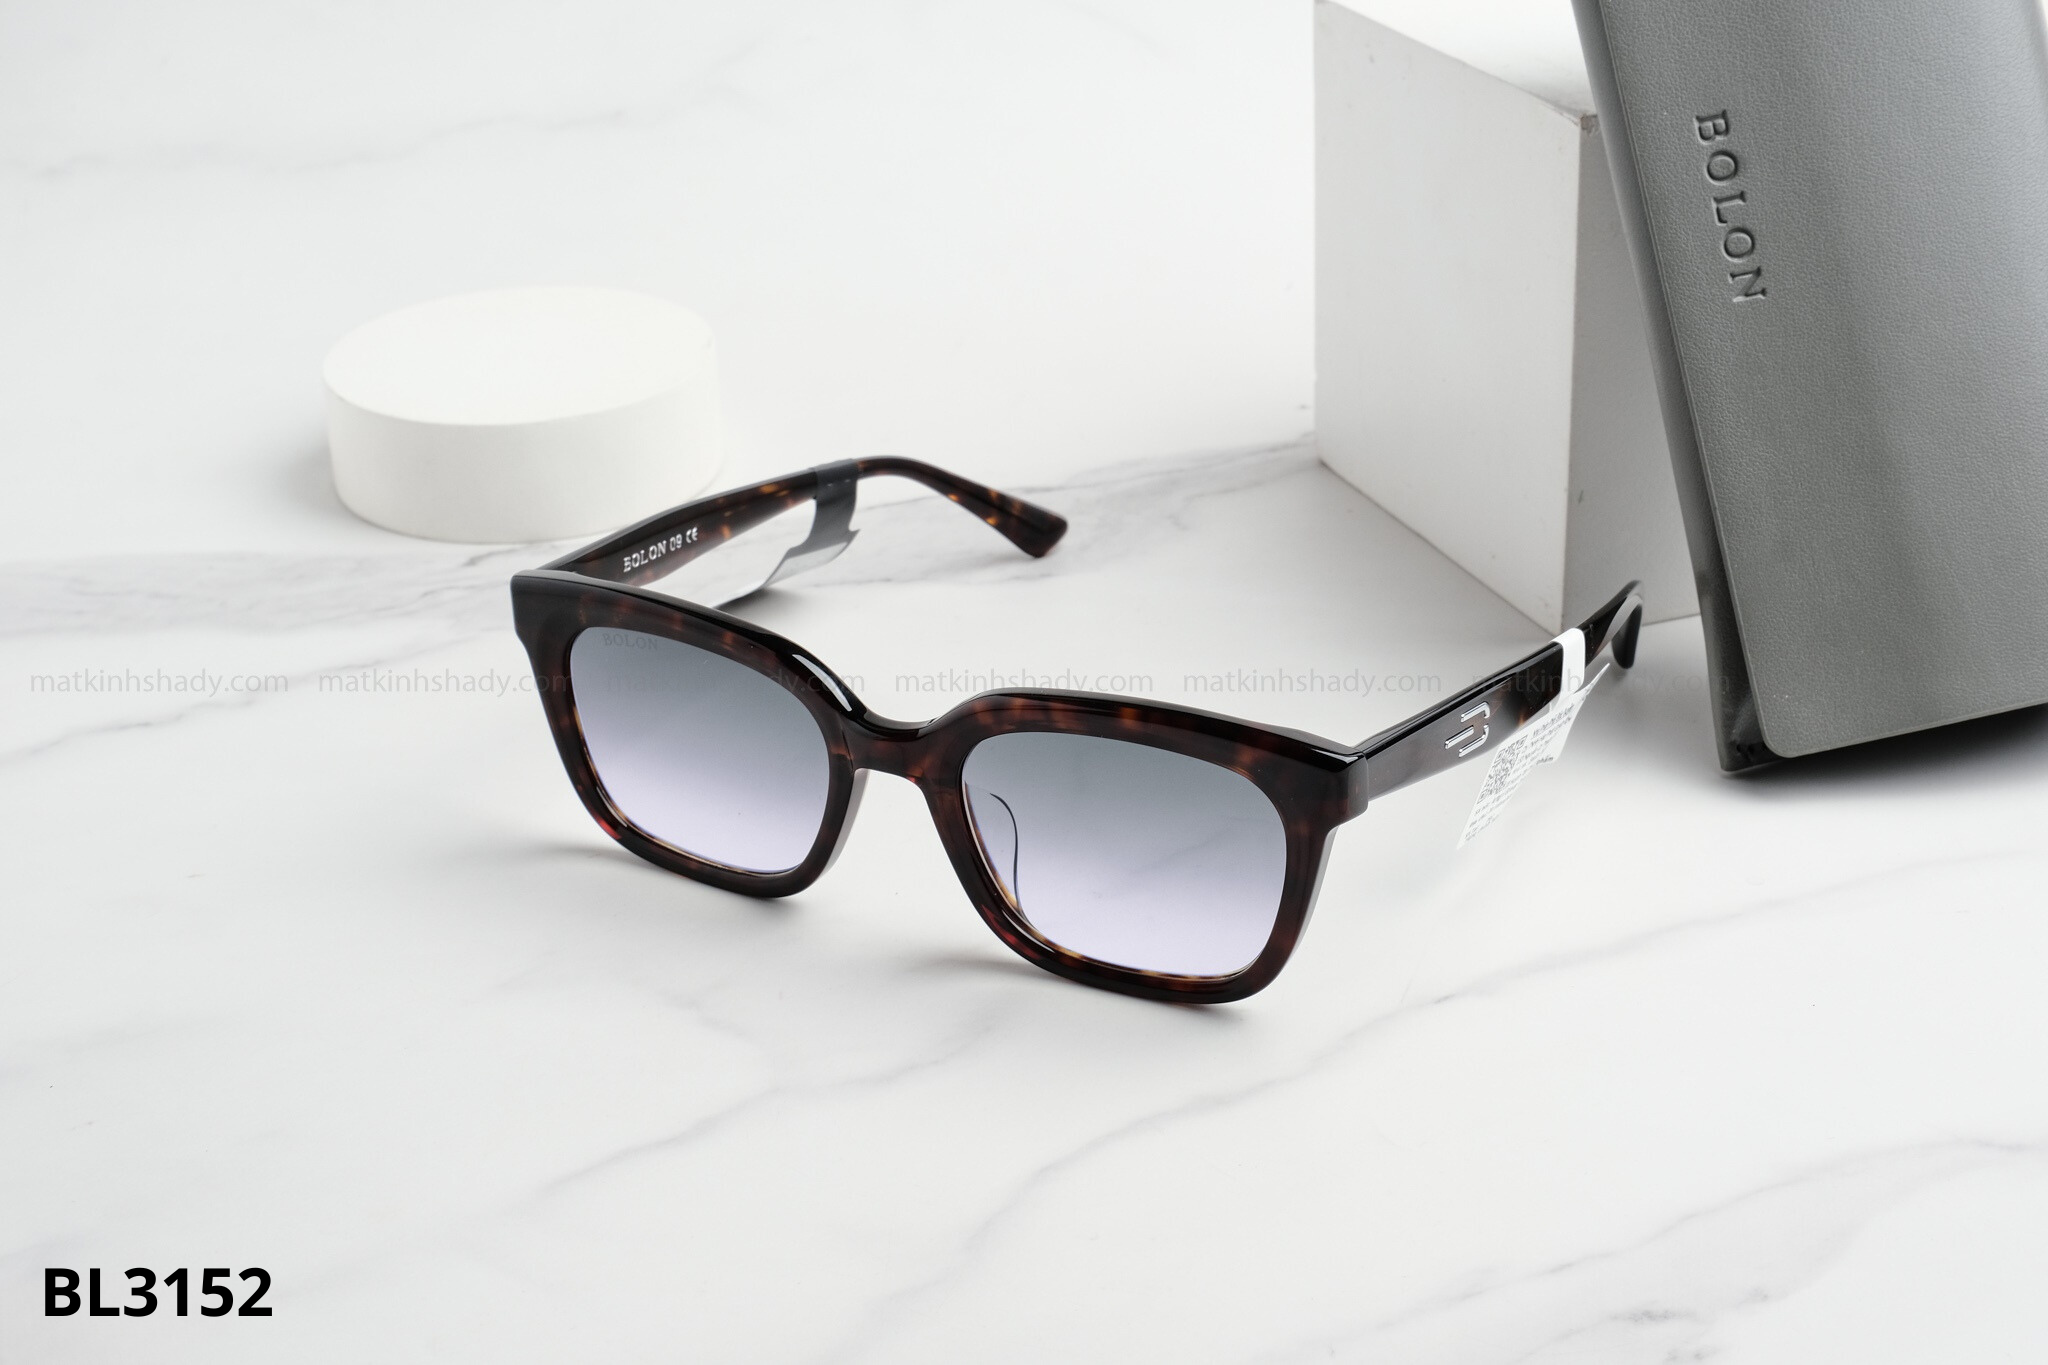  Bolon Eyewear - Sunglasses - BL3152 